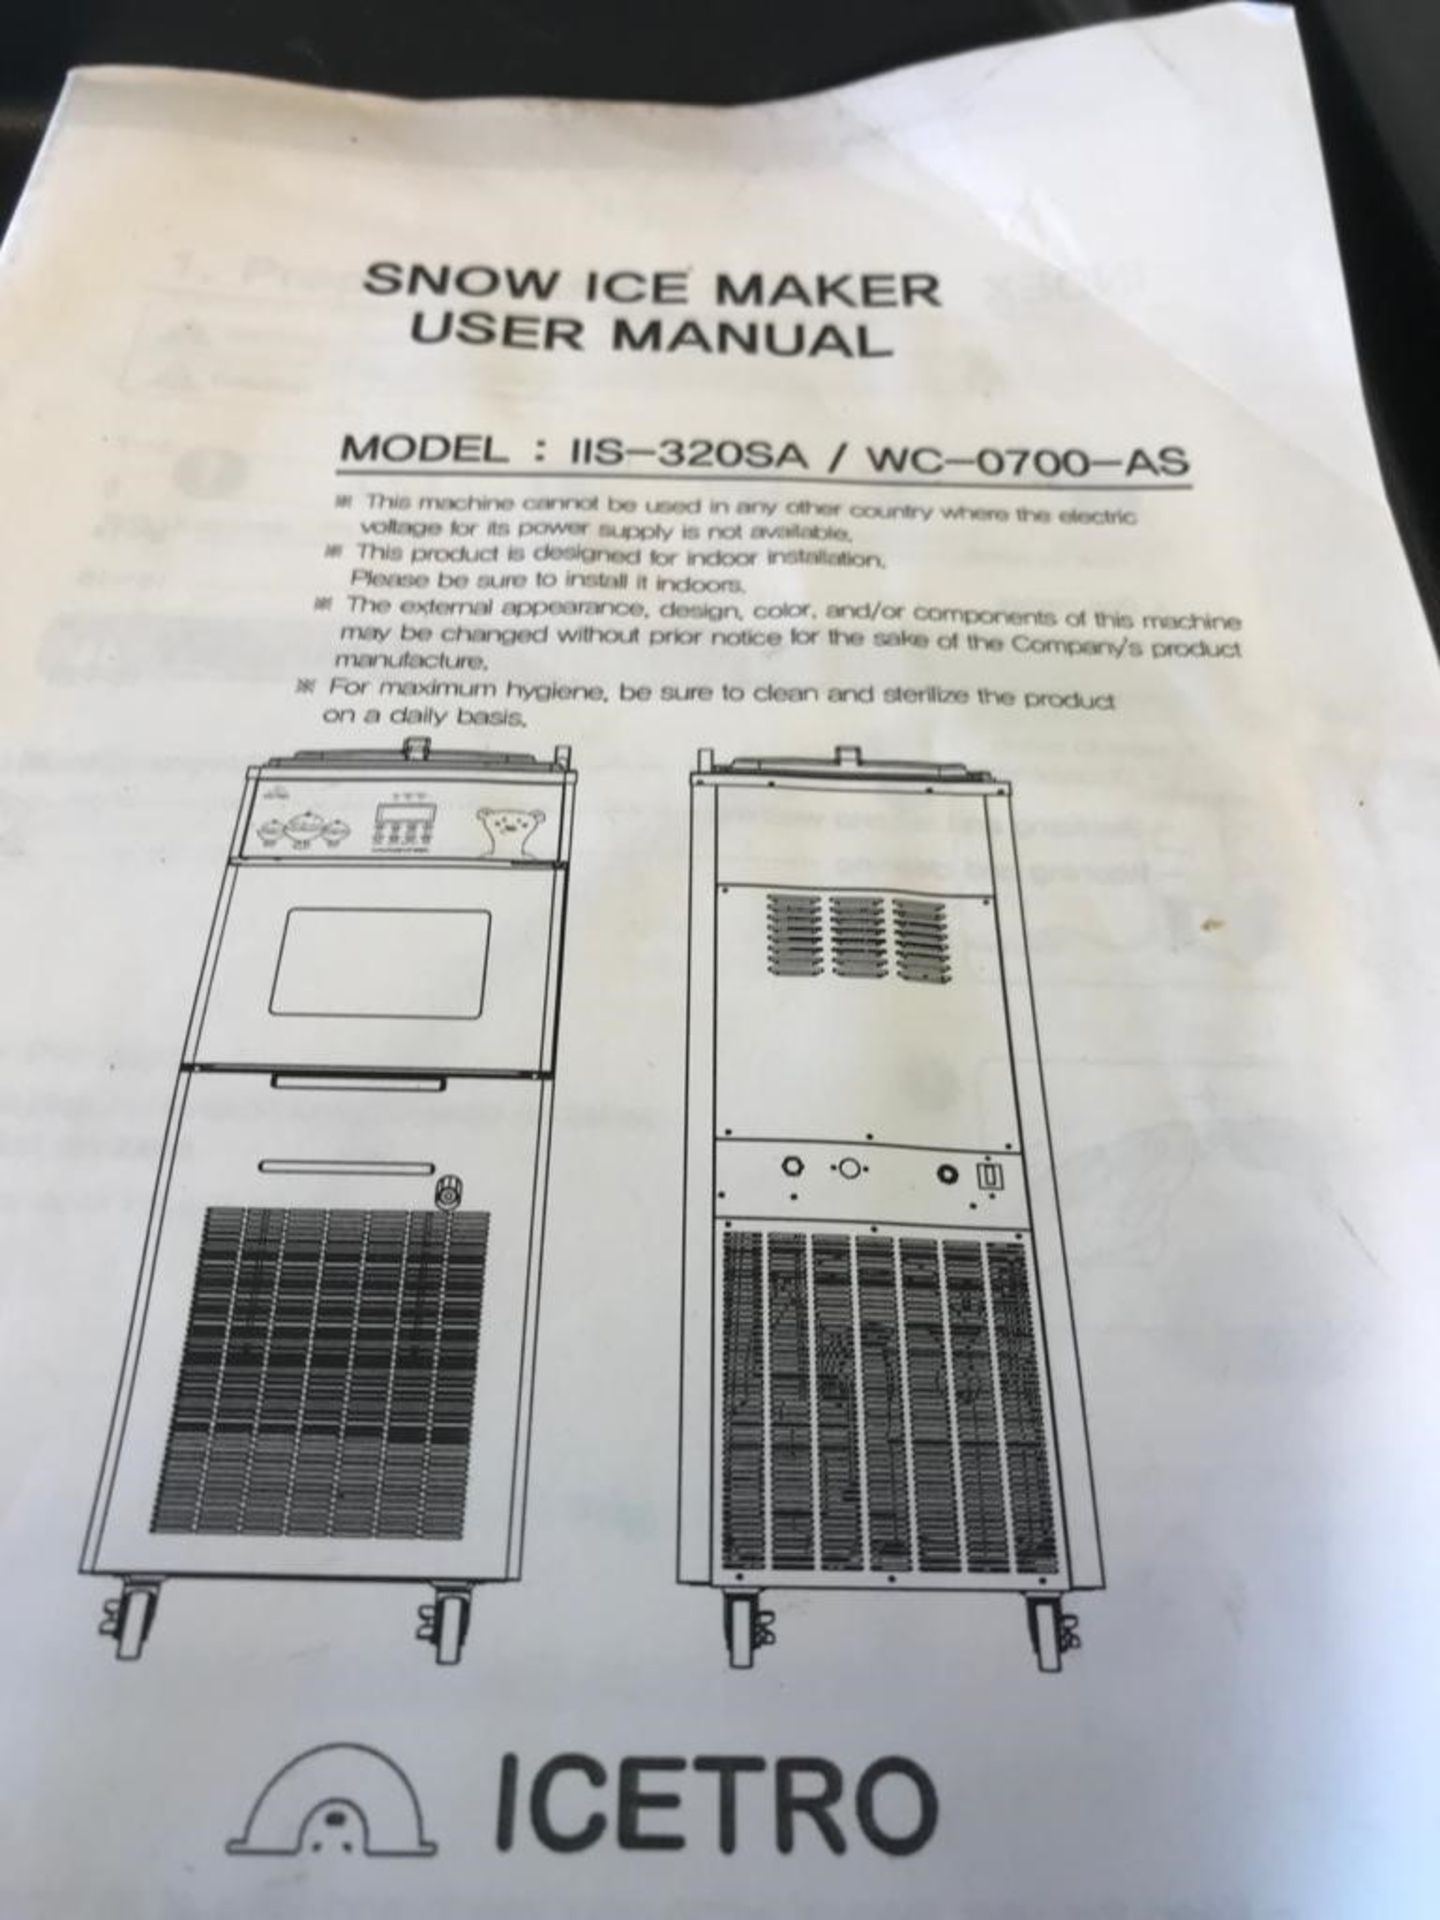 Snow ice maker - Image 7 of 8